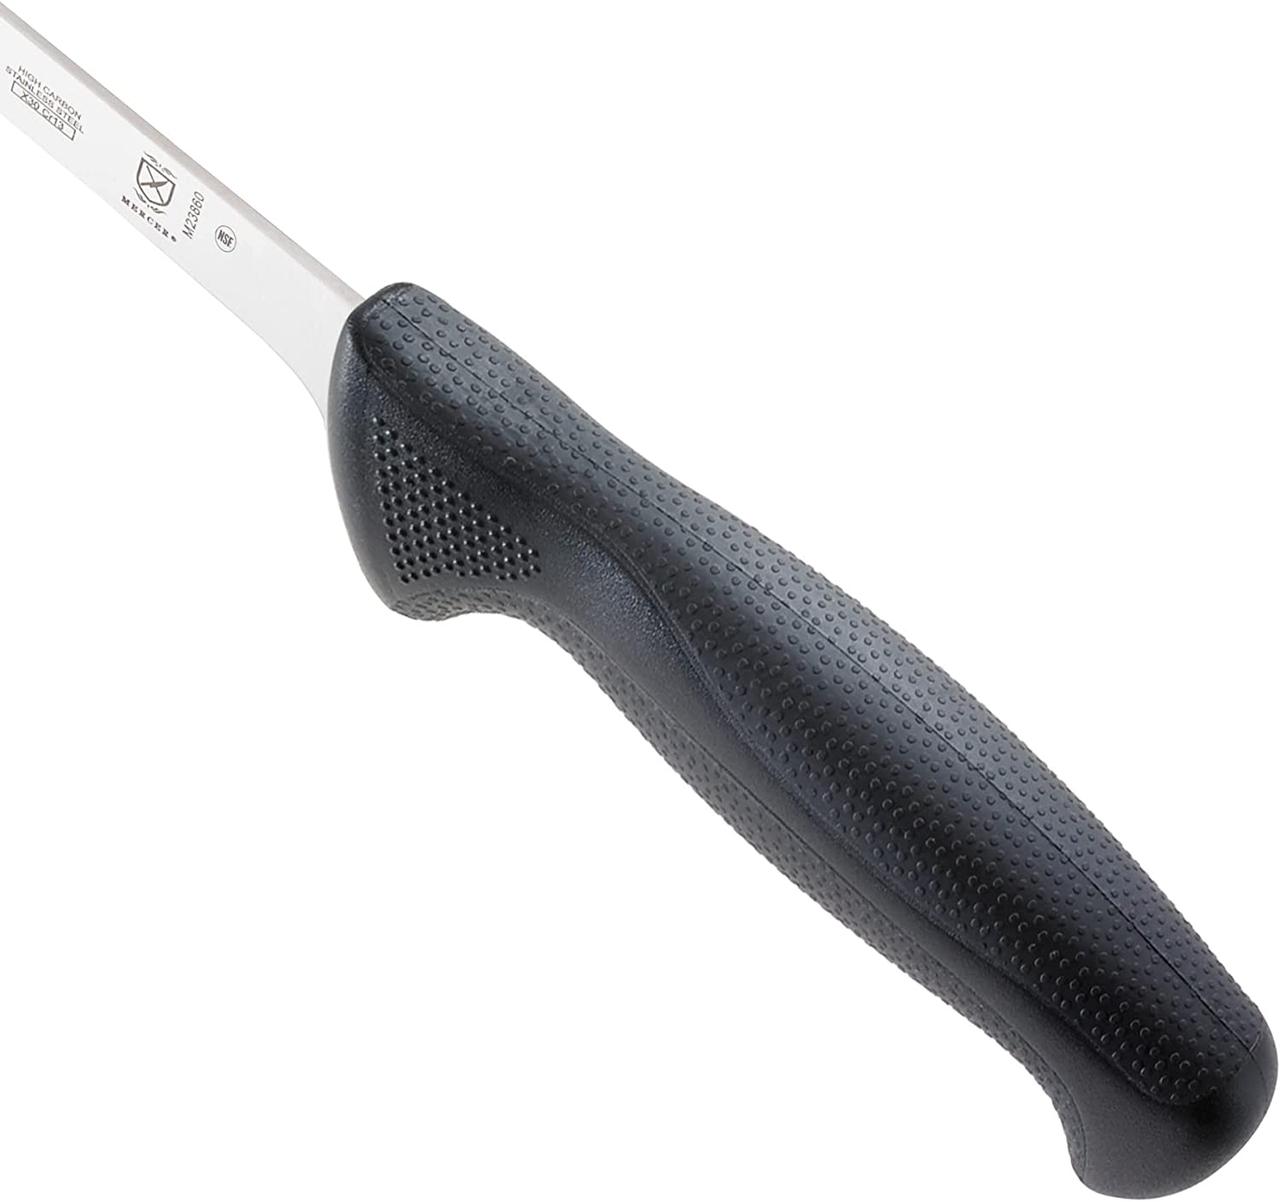 Mercer Culinary Millennia 8-Inch Narrow Fillet Knife 2 - Best Fillet Knife - Fish Fillet Knife